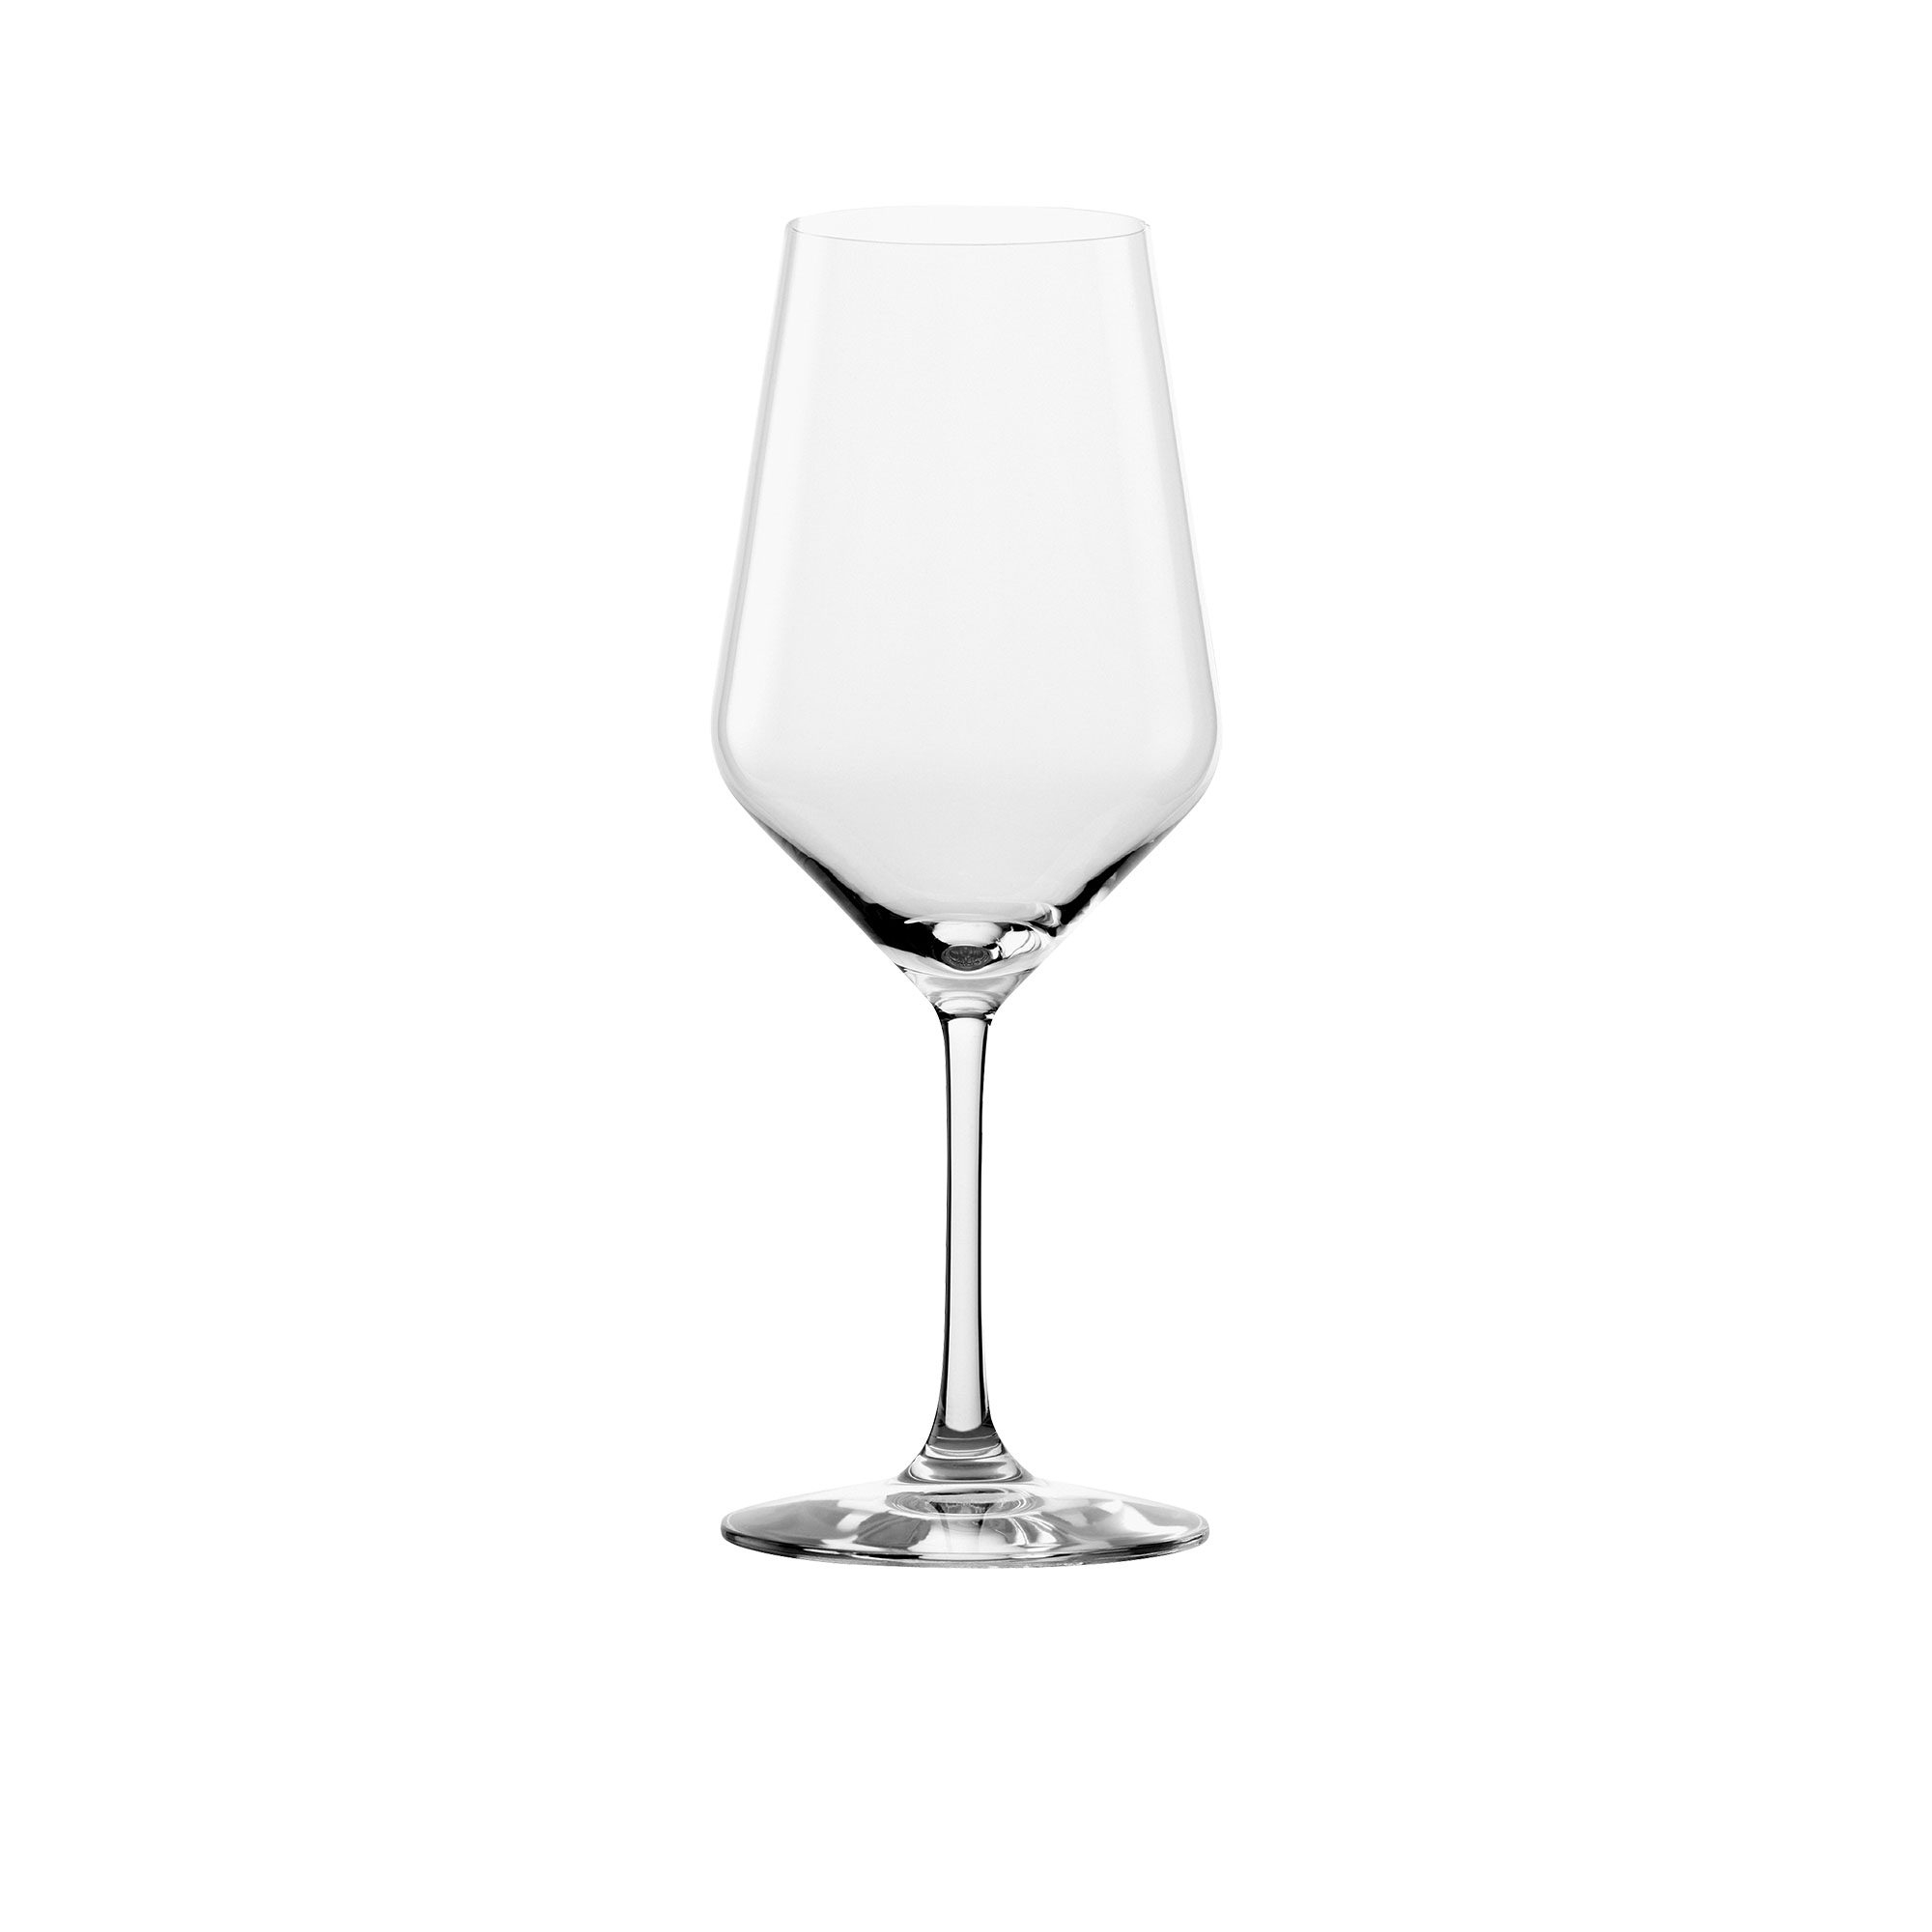 Stolzle Revolution White Wine Glass 365ml Set of 6 Image 2